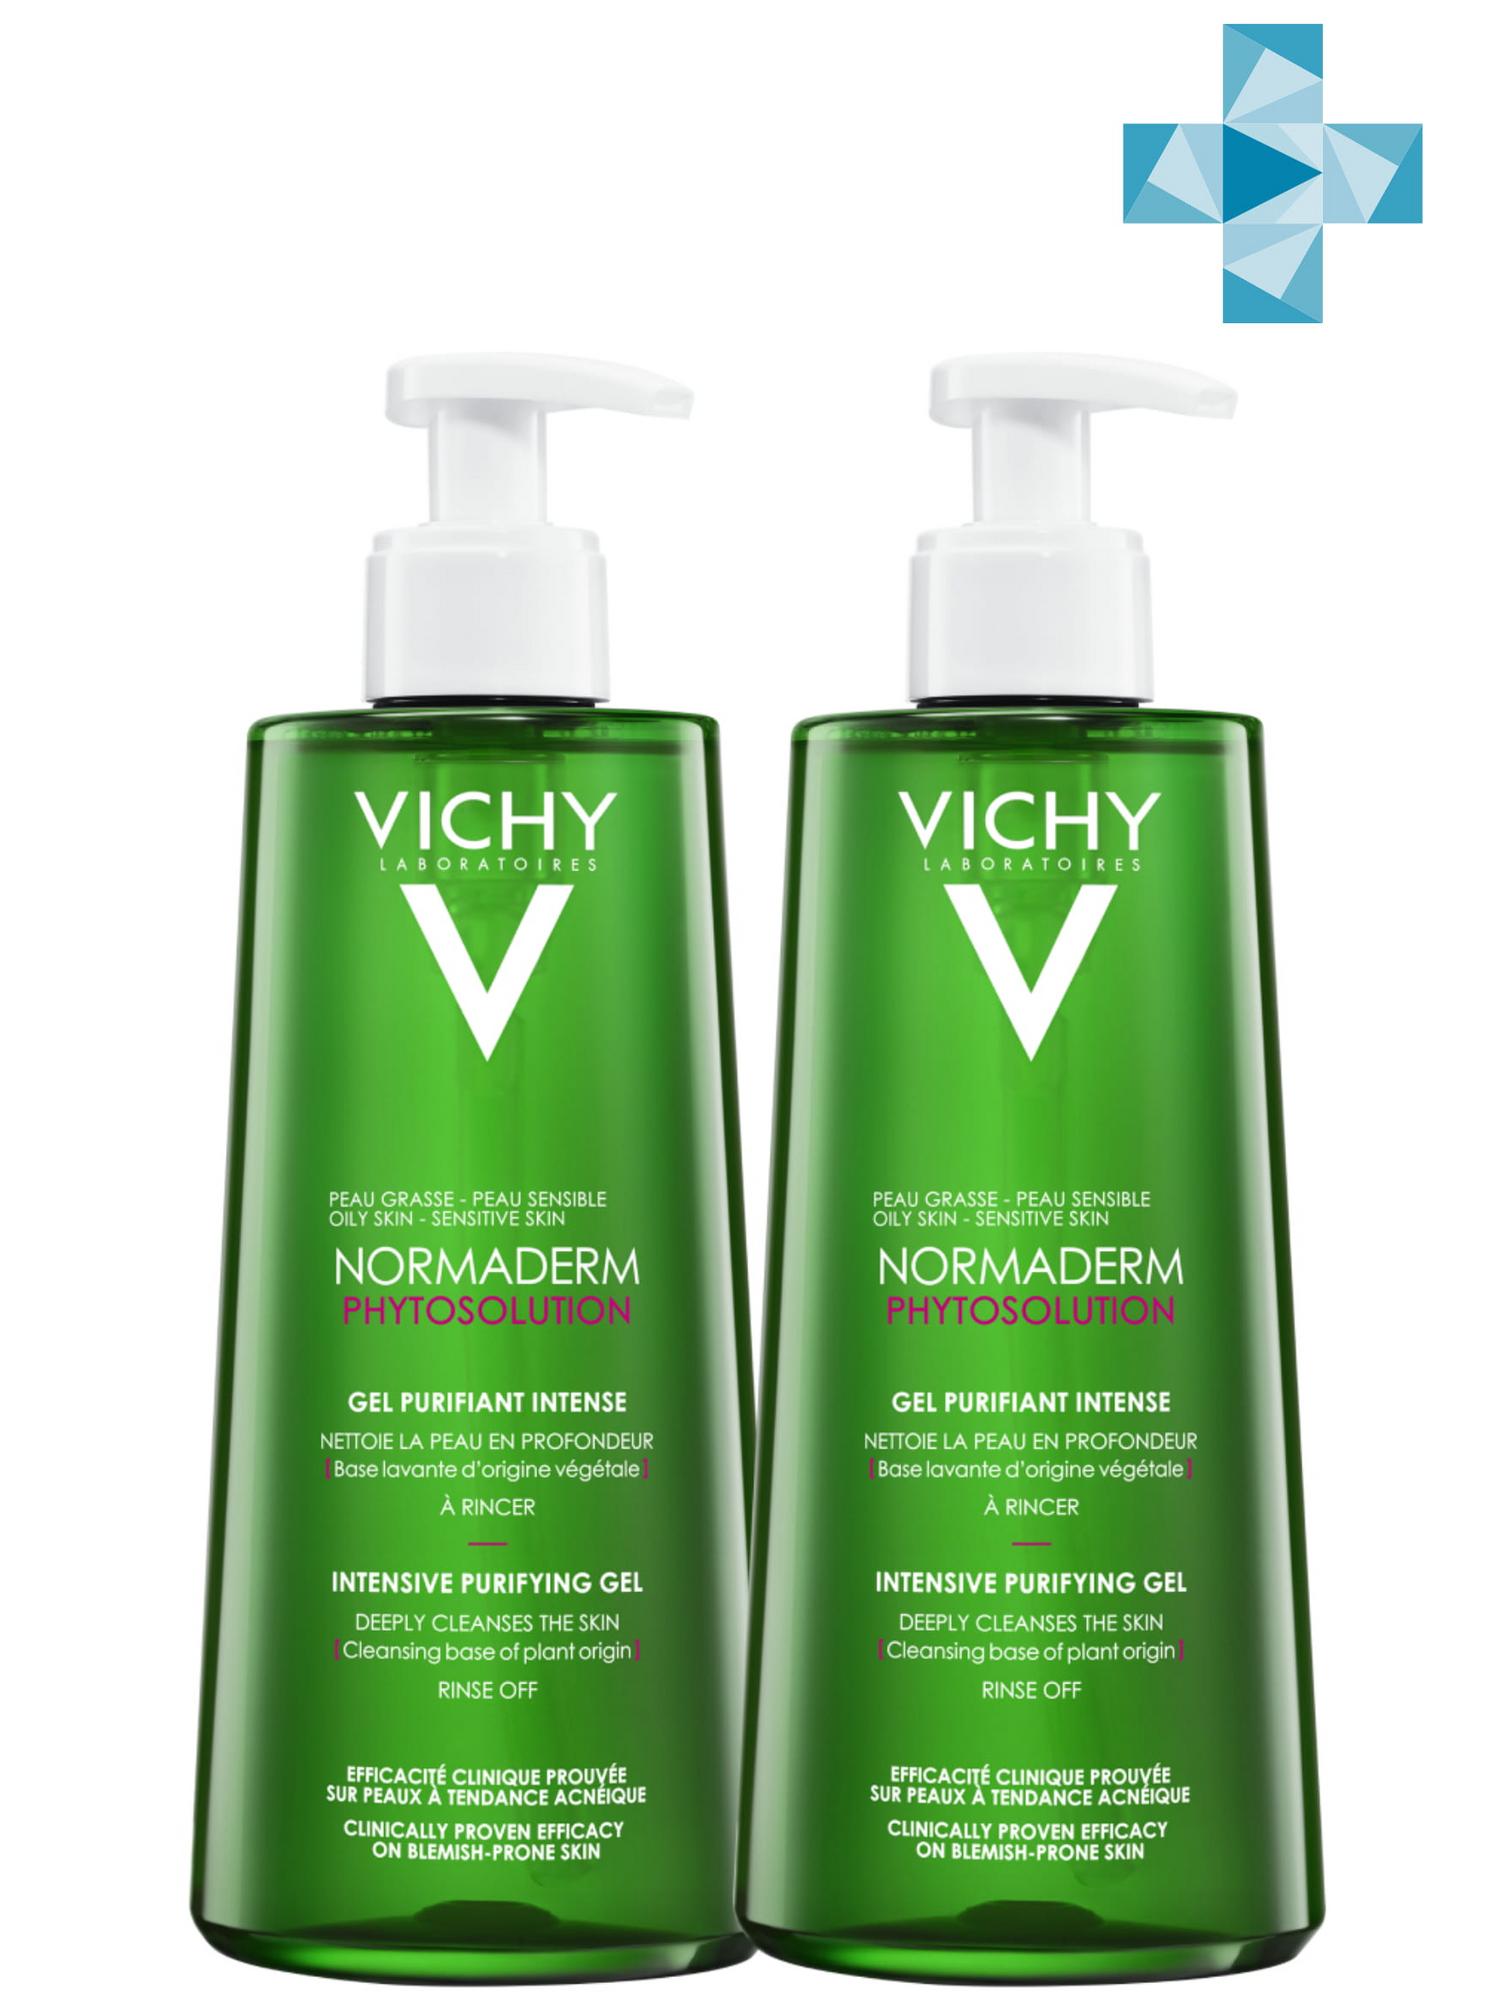 Vichy Комплект Нормадерм Фитосолюшн Очищающий гель для умывания, 2 шт. по 400 мл (Vichy, Normaderm)